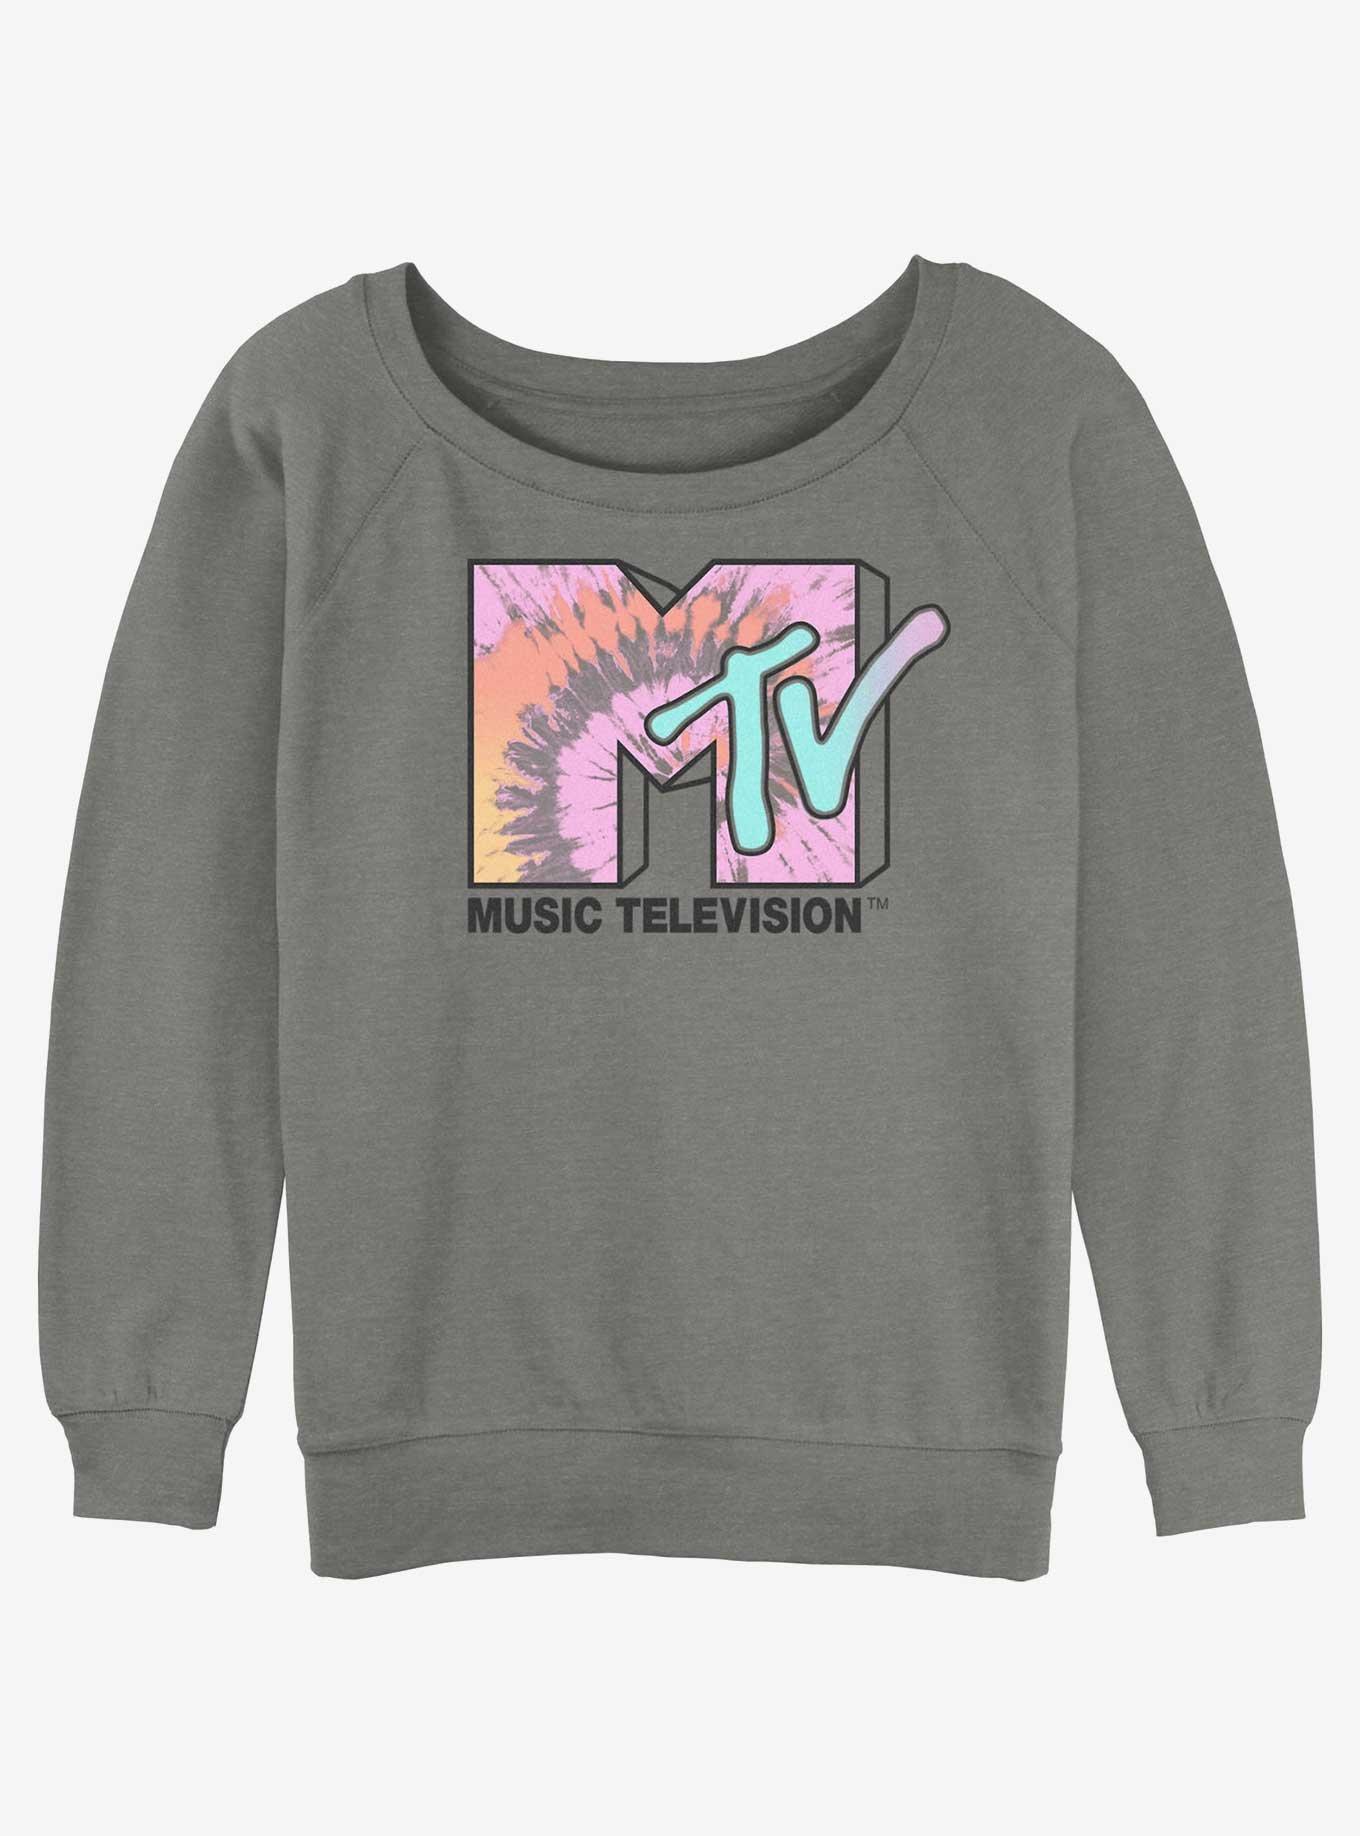 MTV Tie-Dye Logo Girls Slouchy Sweatshirt